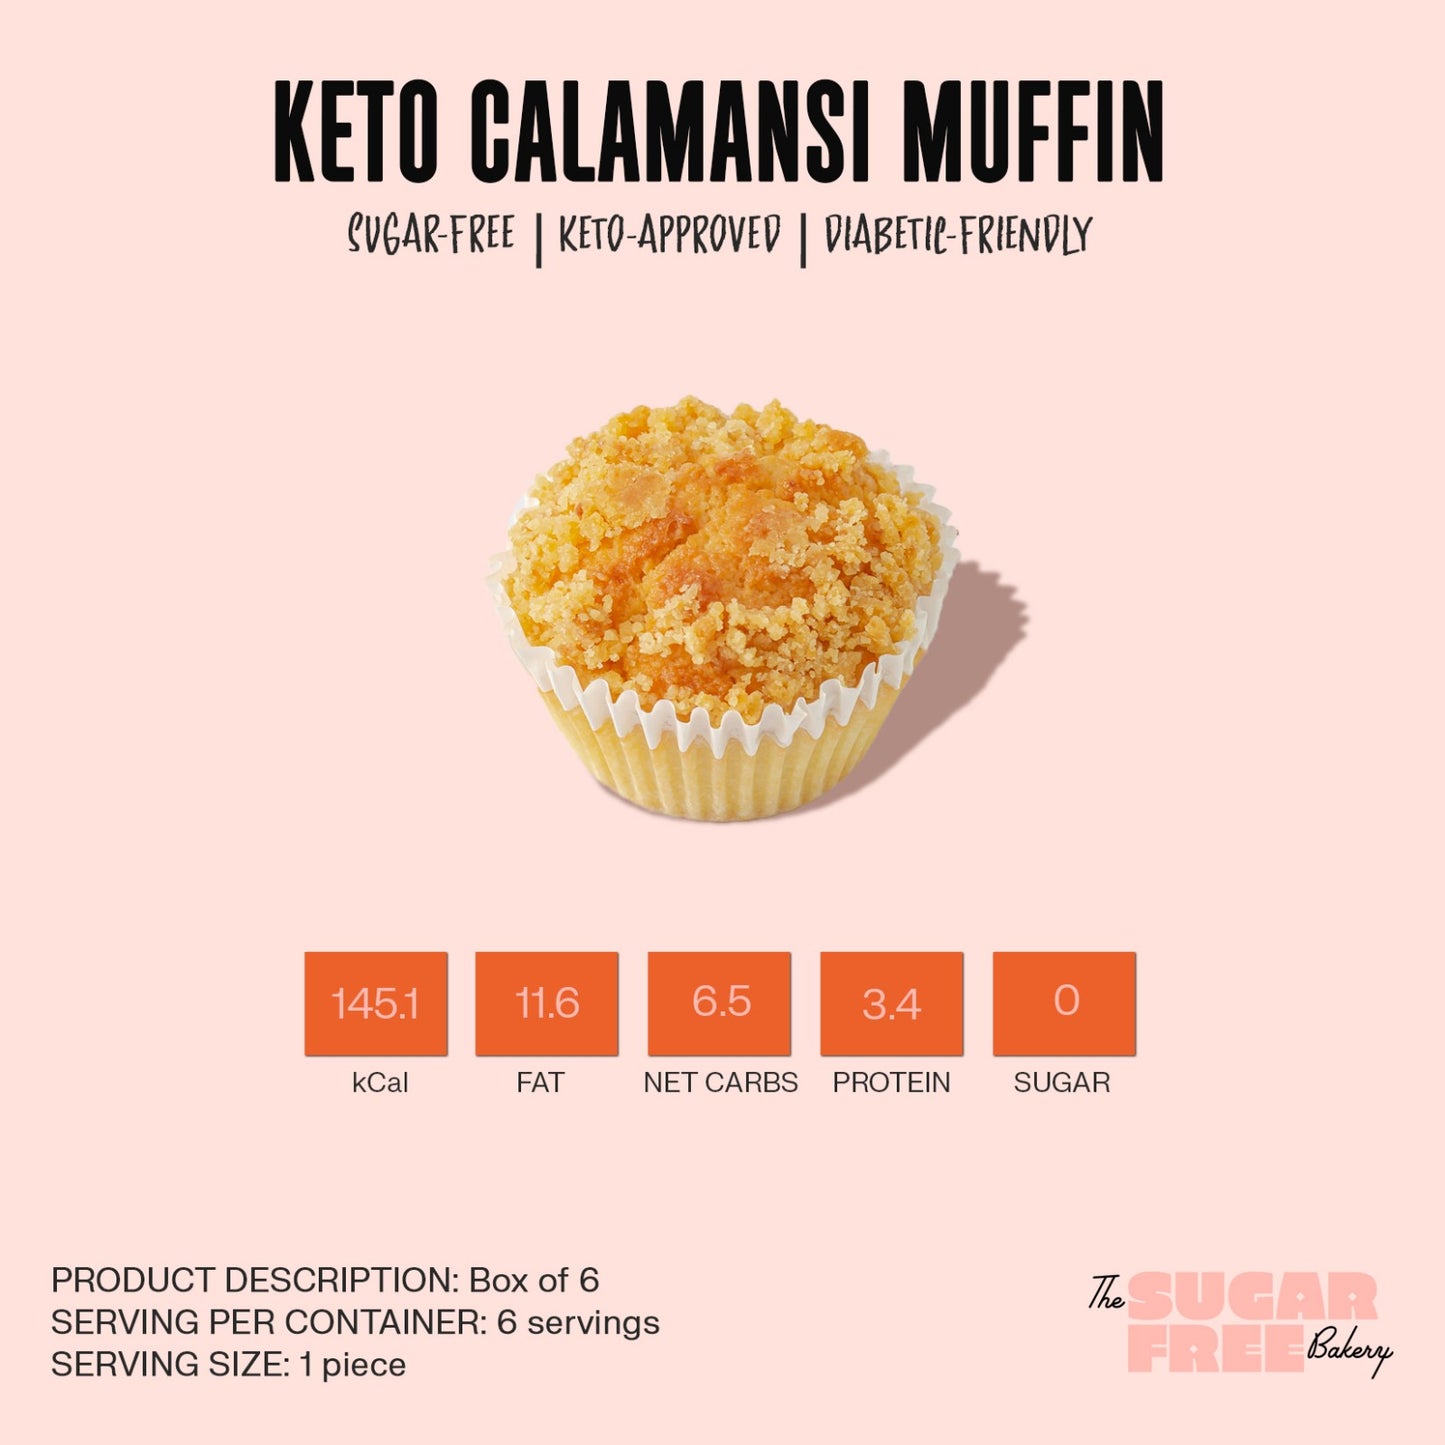 keto calamansi muffin | keto muffin | sugar free muffin | calamansi muffin | keto snacks | the sugar free bakery